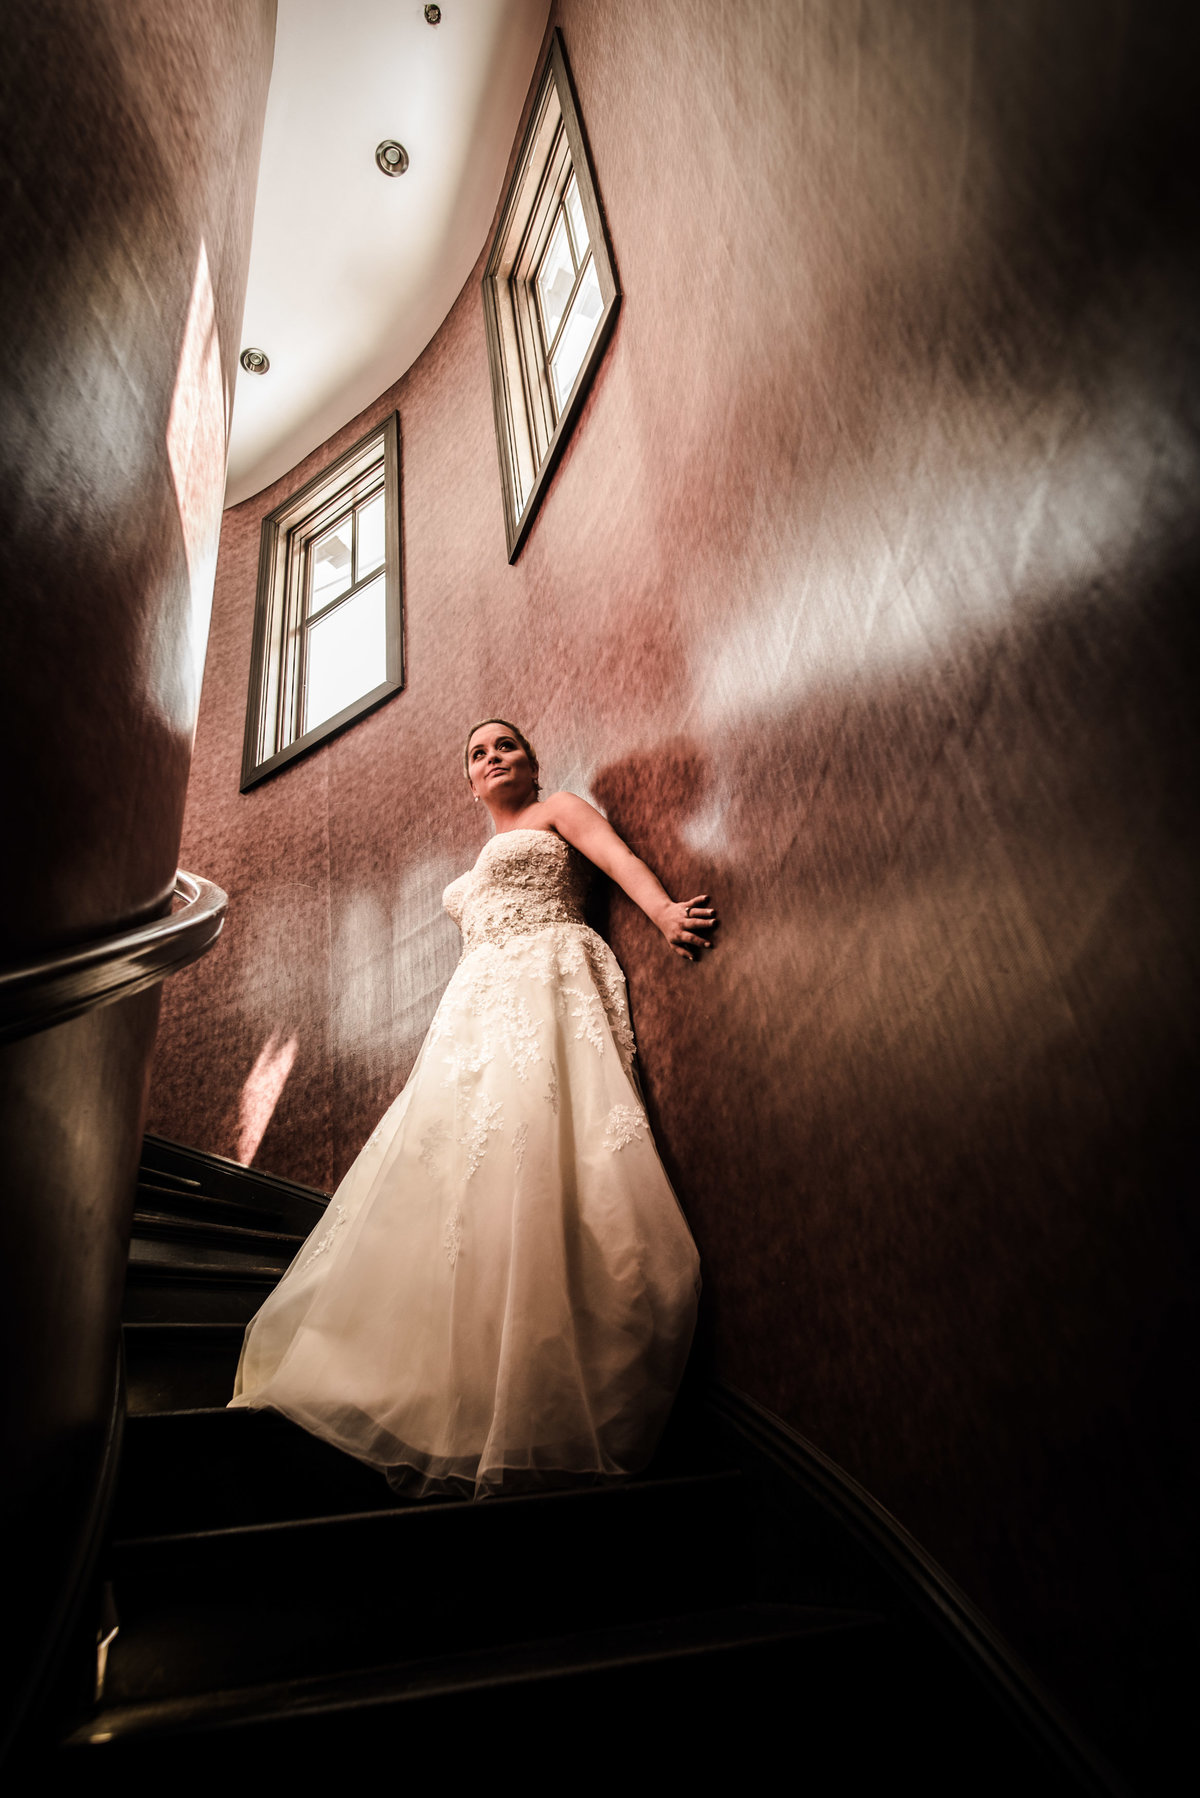 Bridal Portrait - Insignia Steak House, New York - Imagine Studios Photography - Wedding Photographer